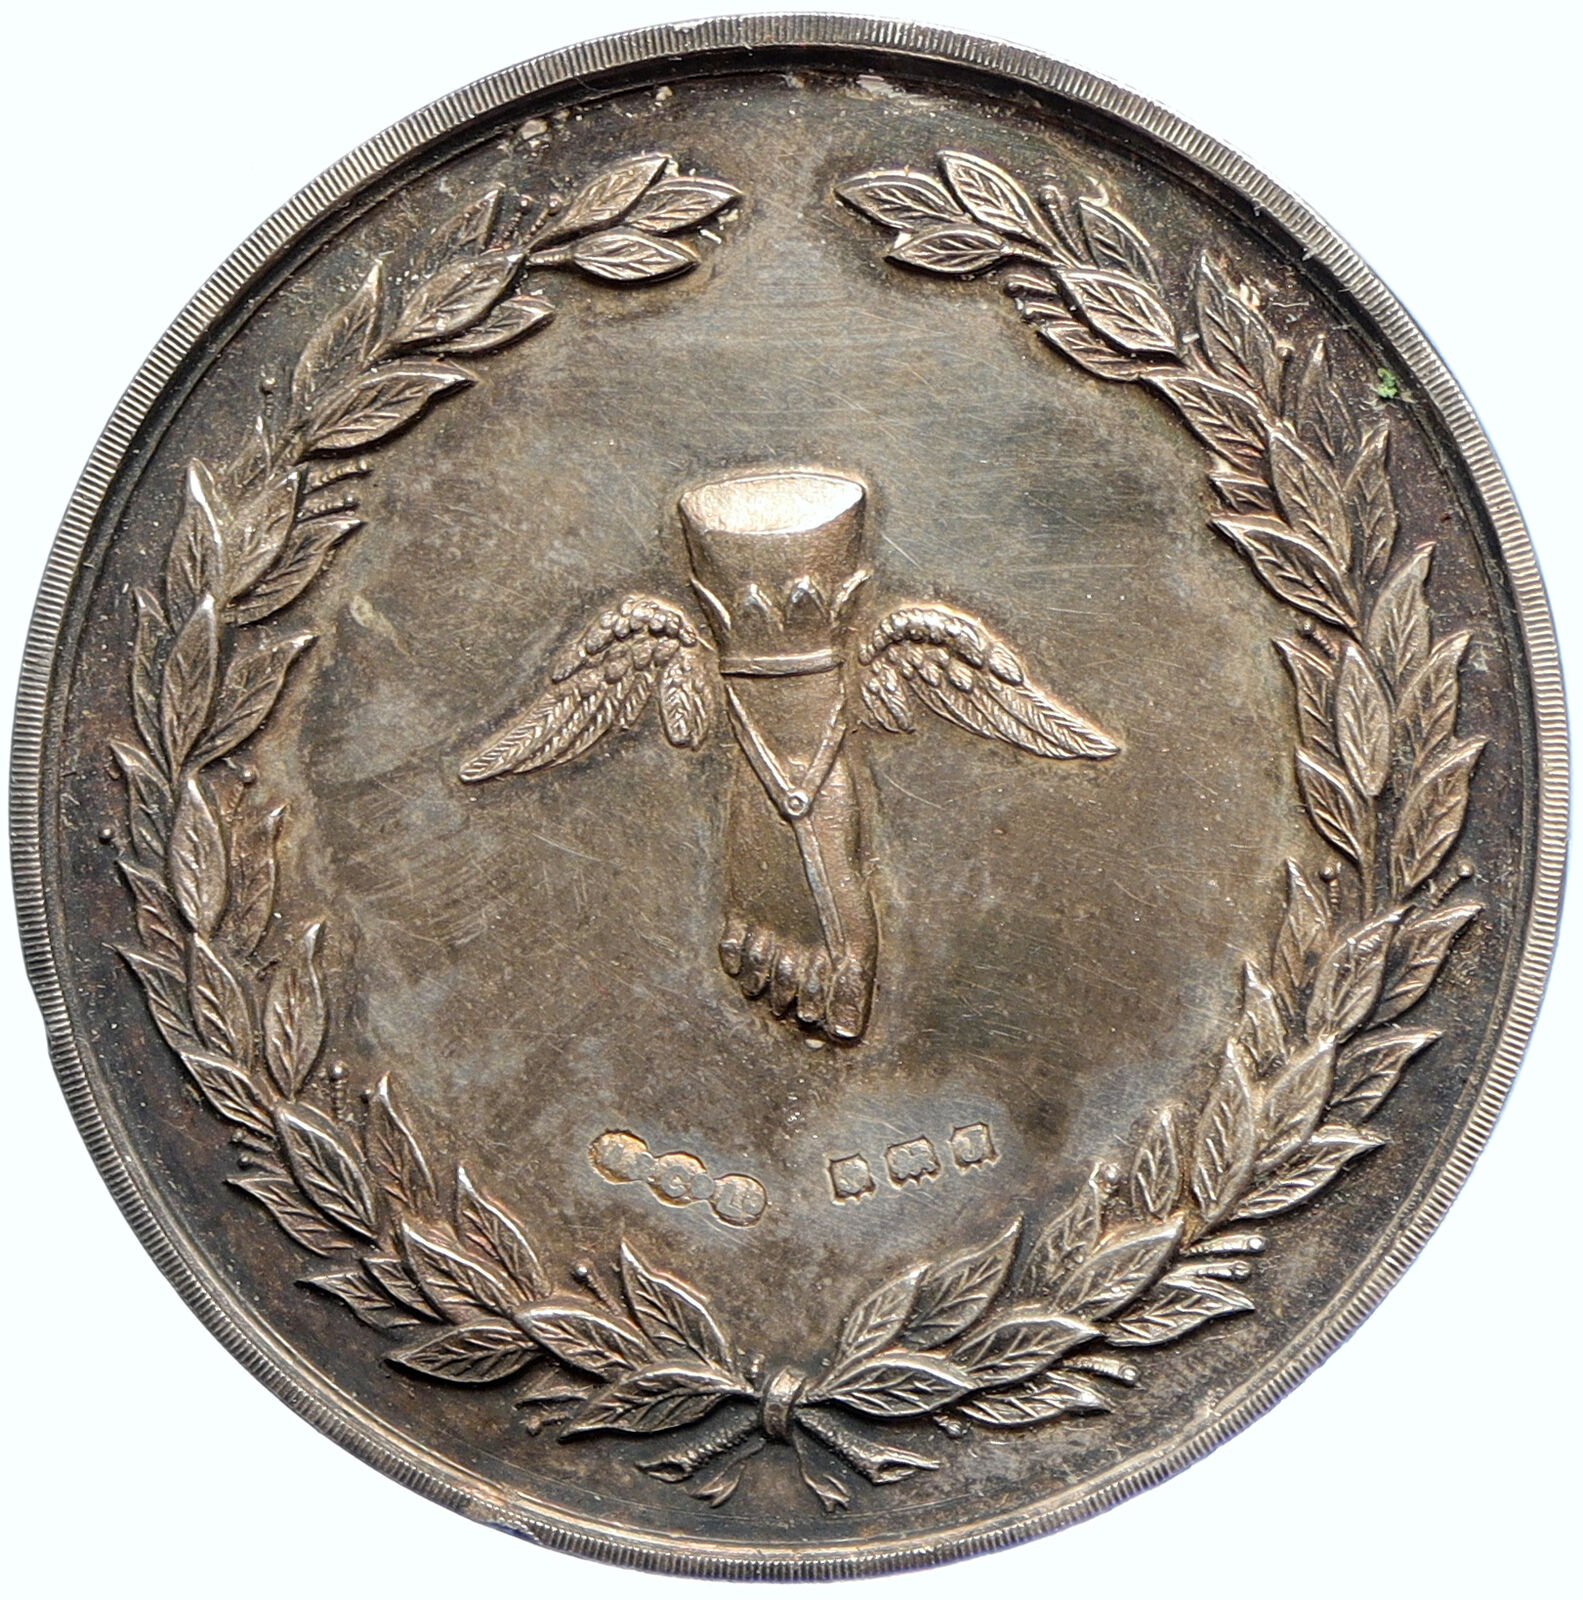 UK United Kingdom UNIVERSITY OF CAMBRIDGE Mercury Foot C&C Silver Medal i112866